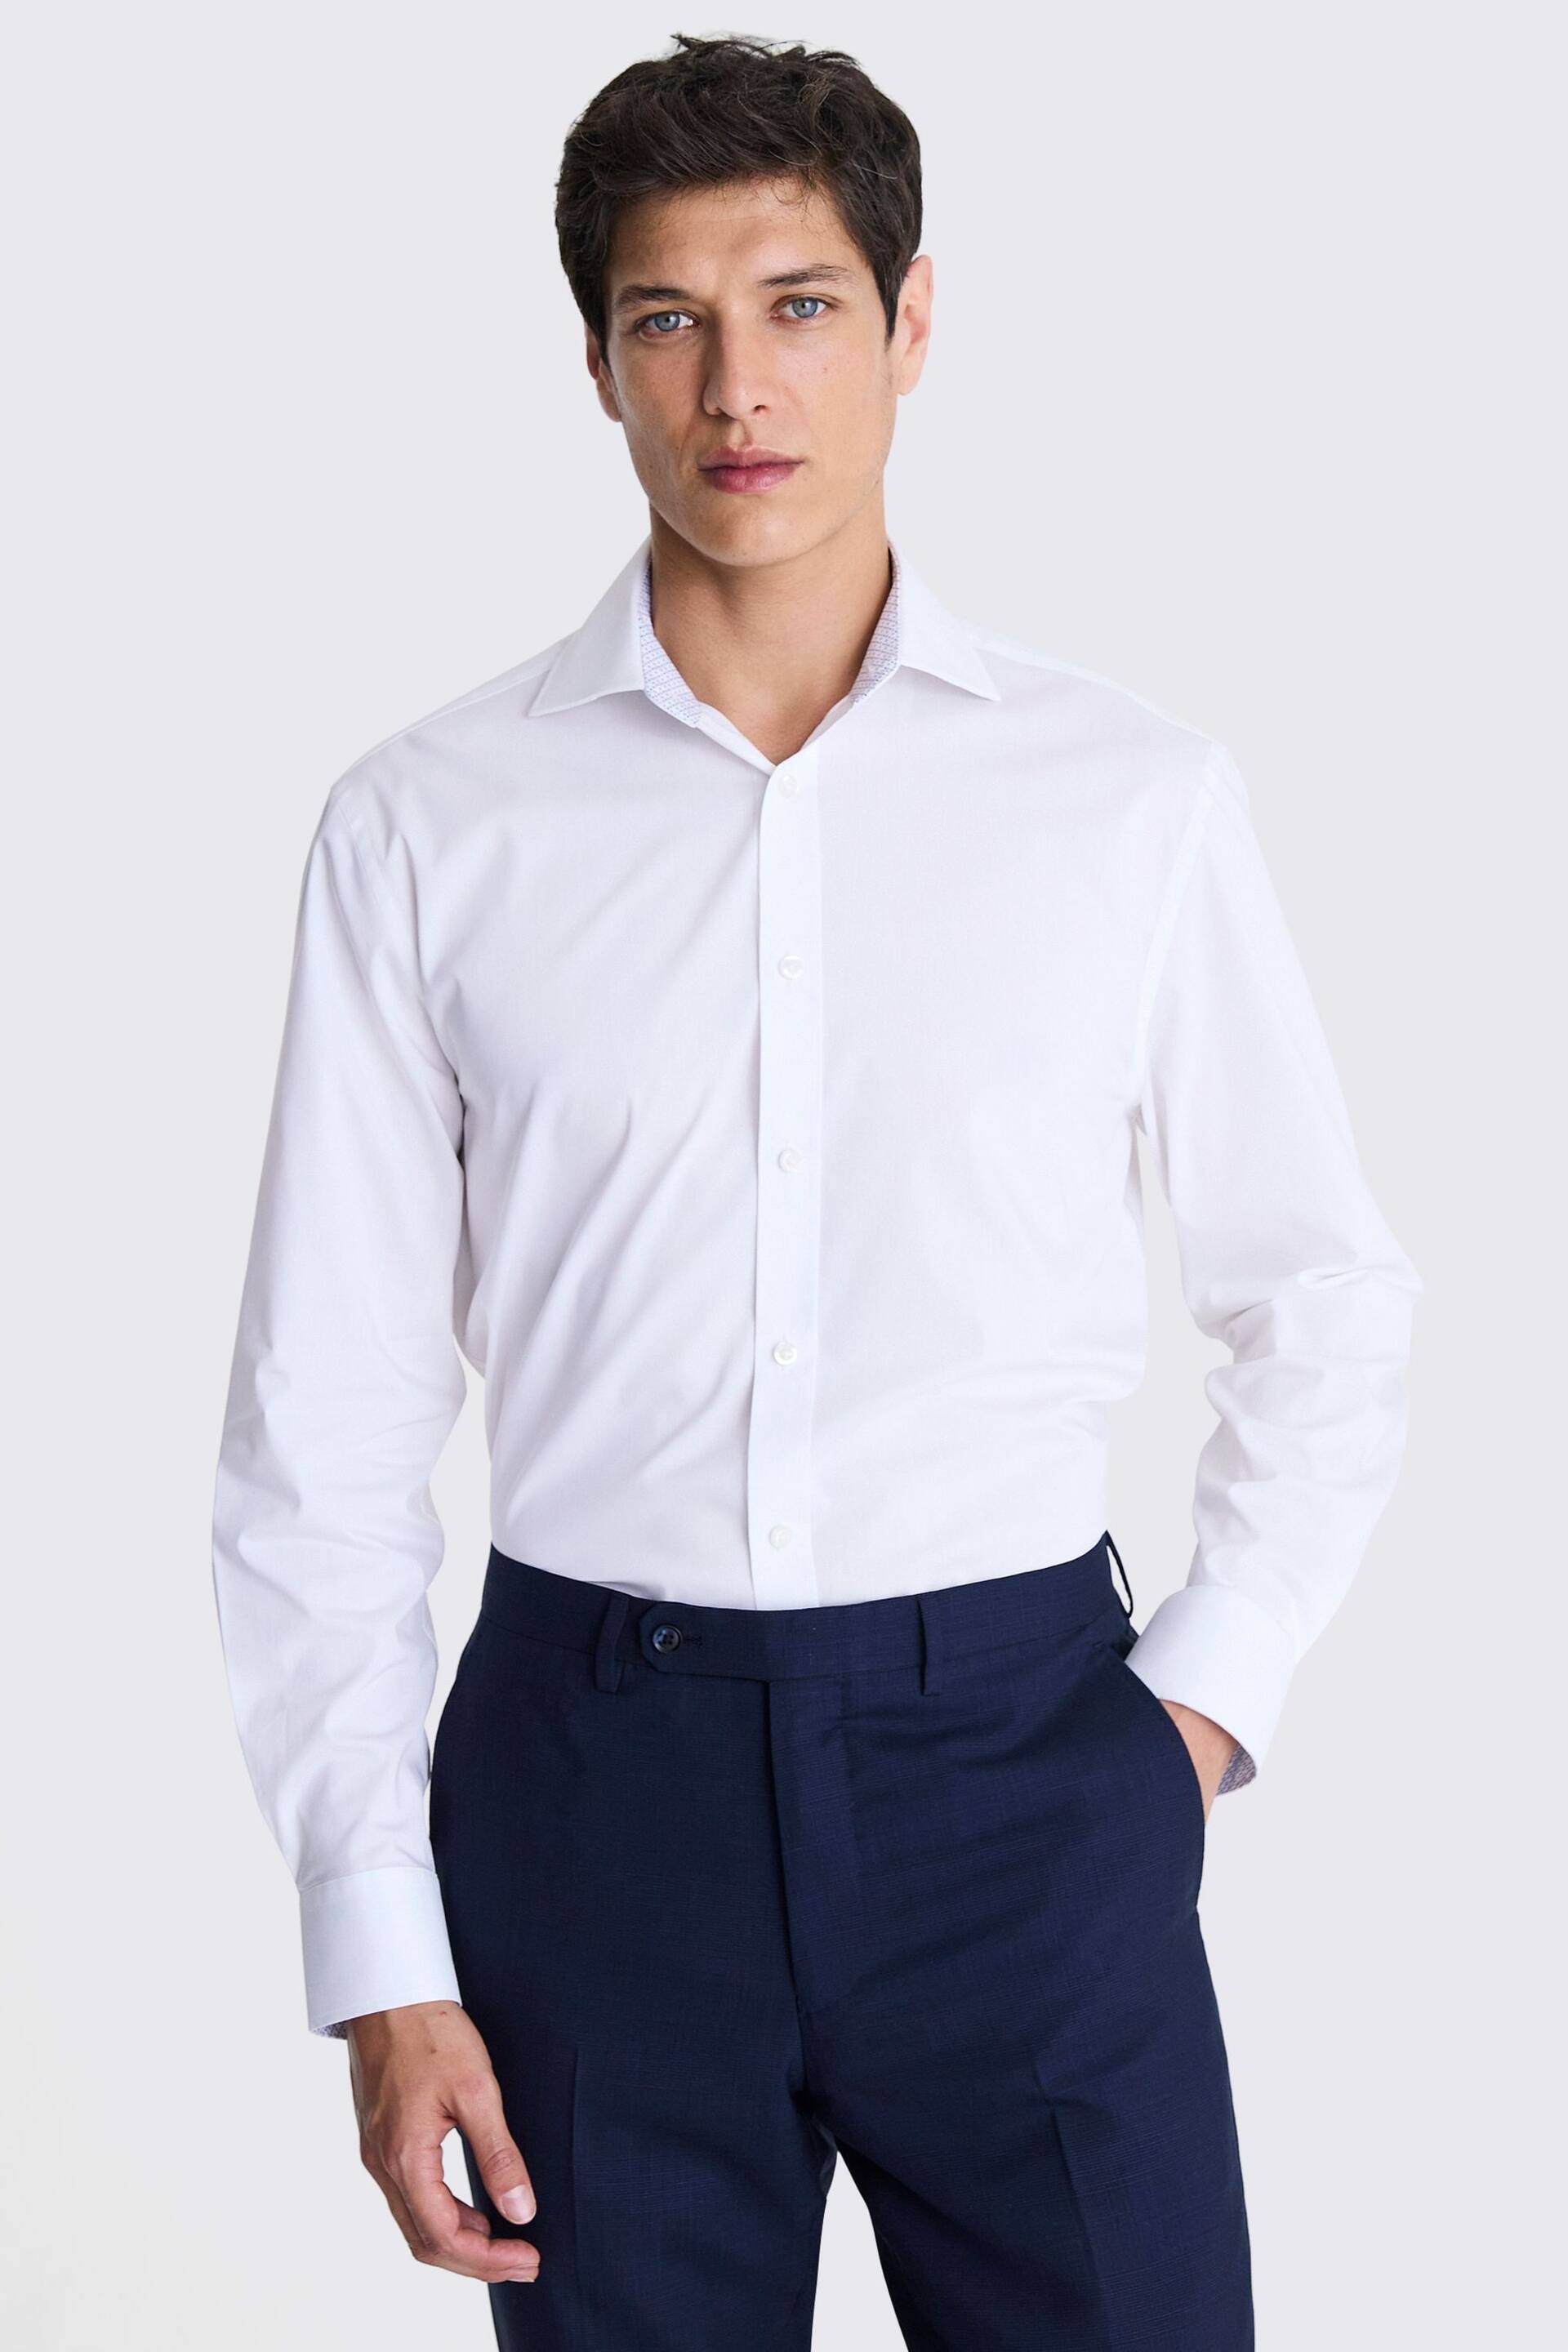 MOSS Off White Single Cuff Stretch Shirt - Image 1 of 3